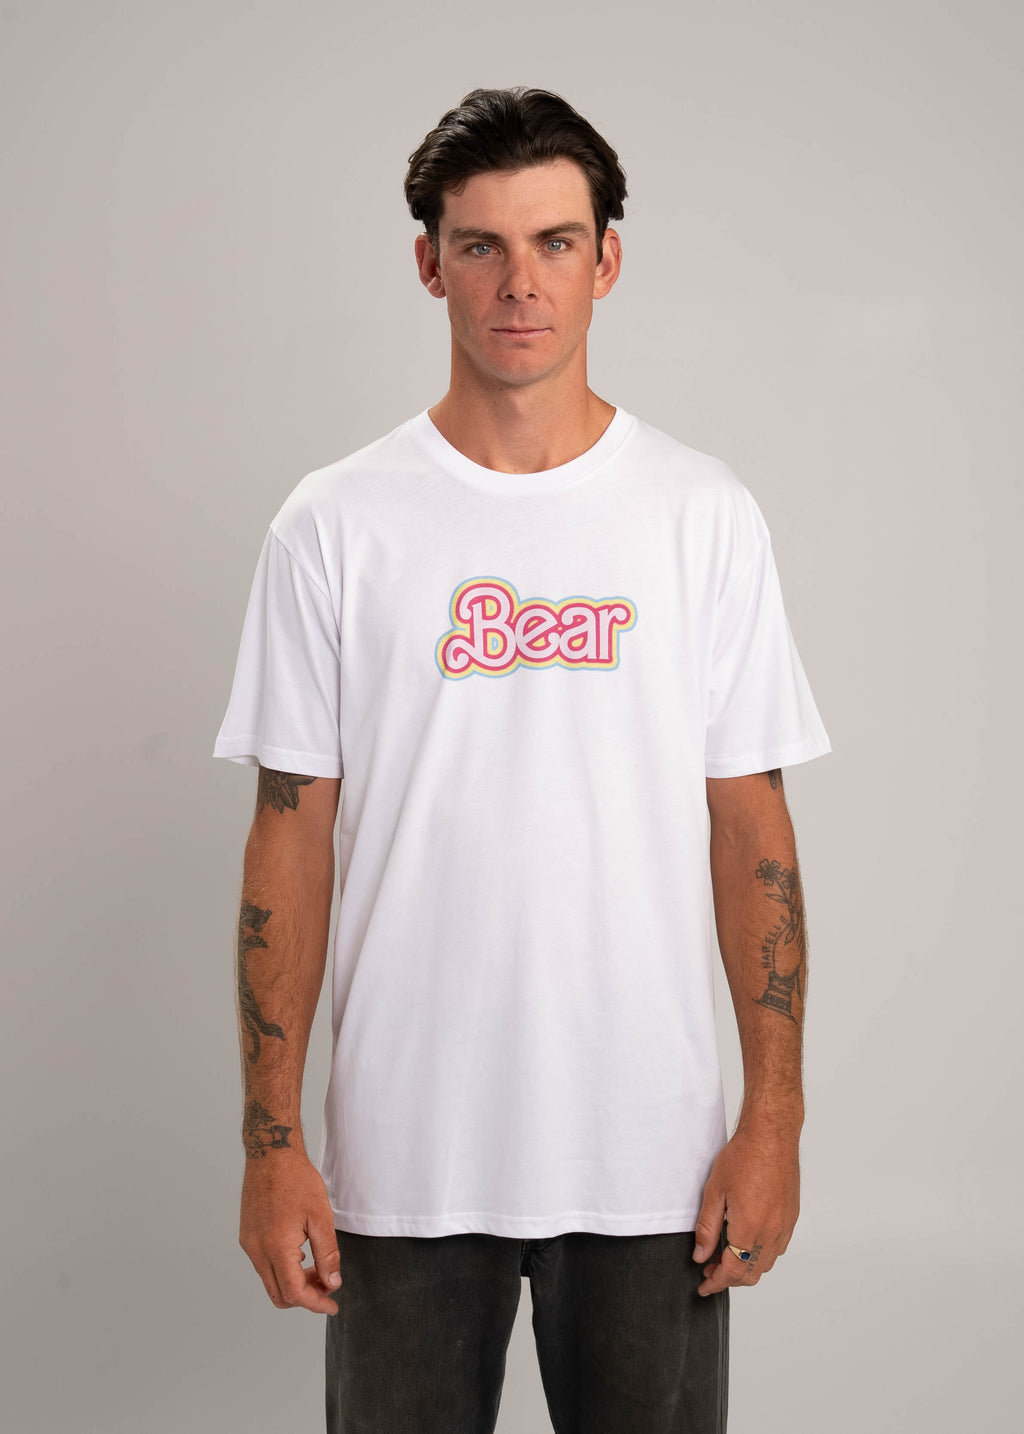 Dr.Moose Byron Bay Bear T-Shirt